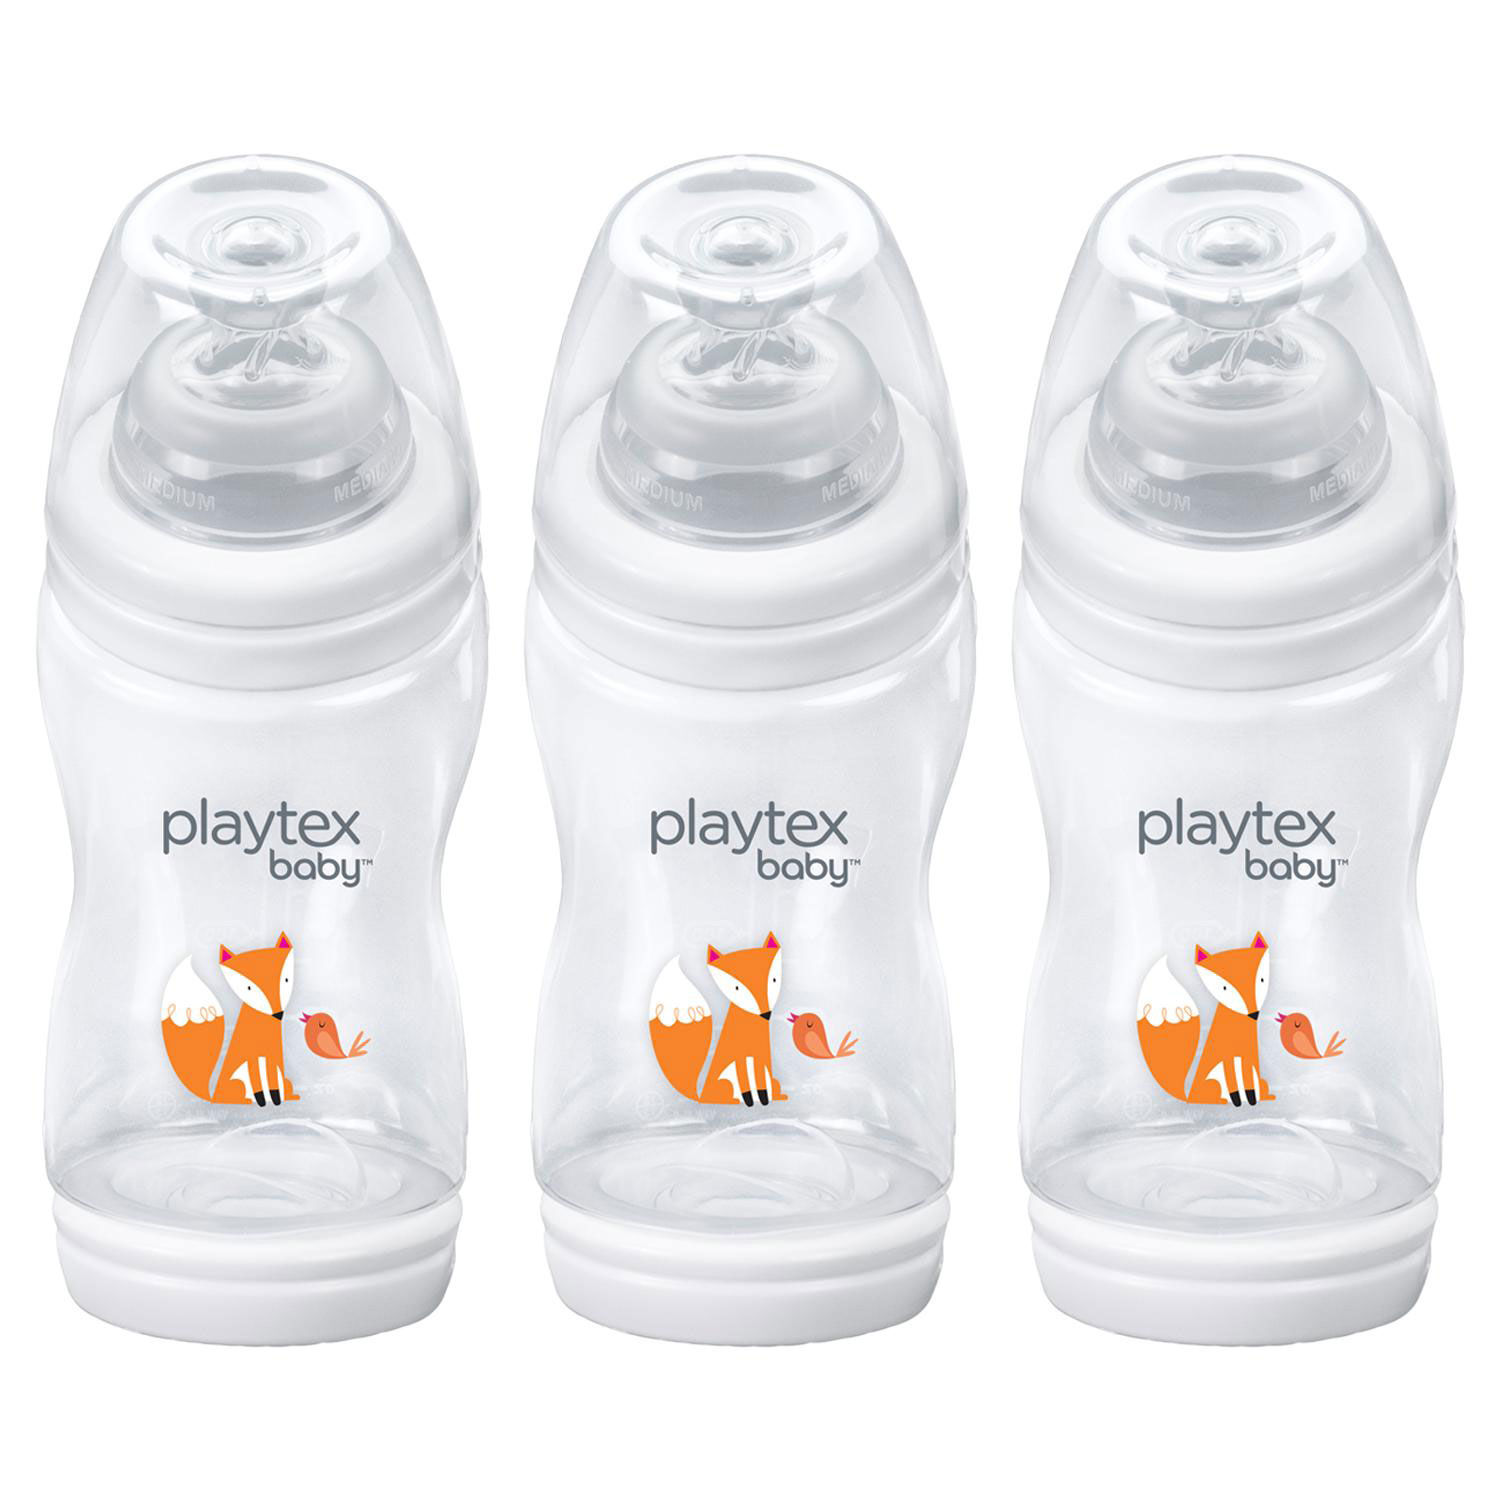 playtex baby bottles